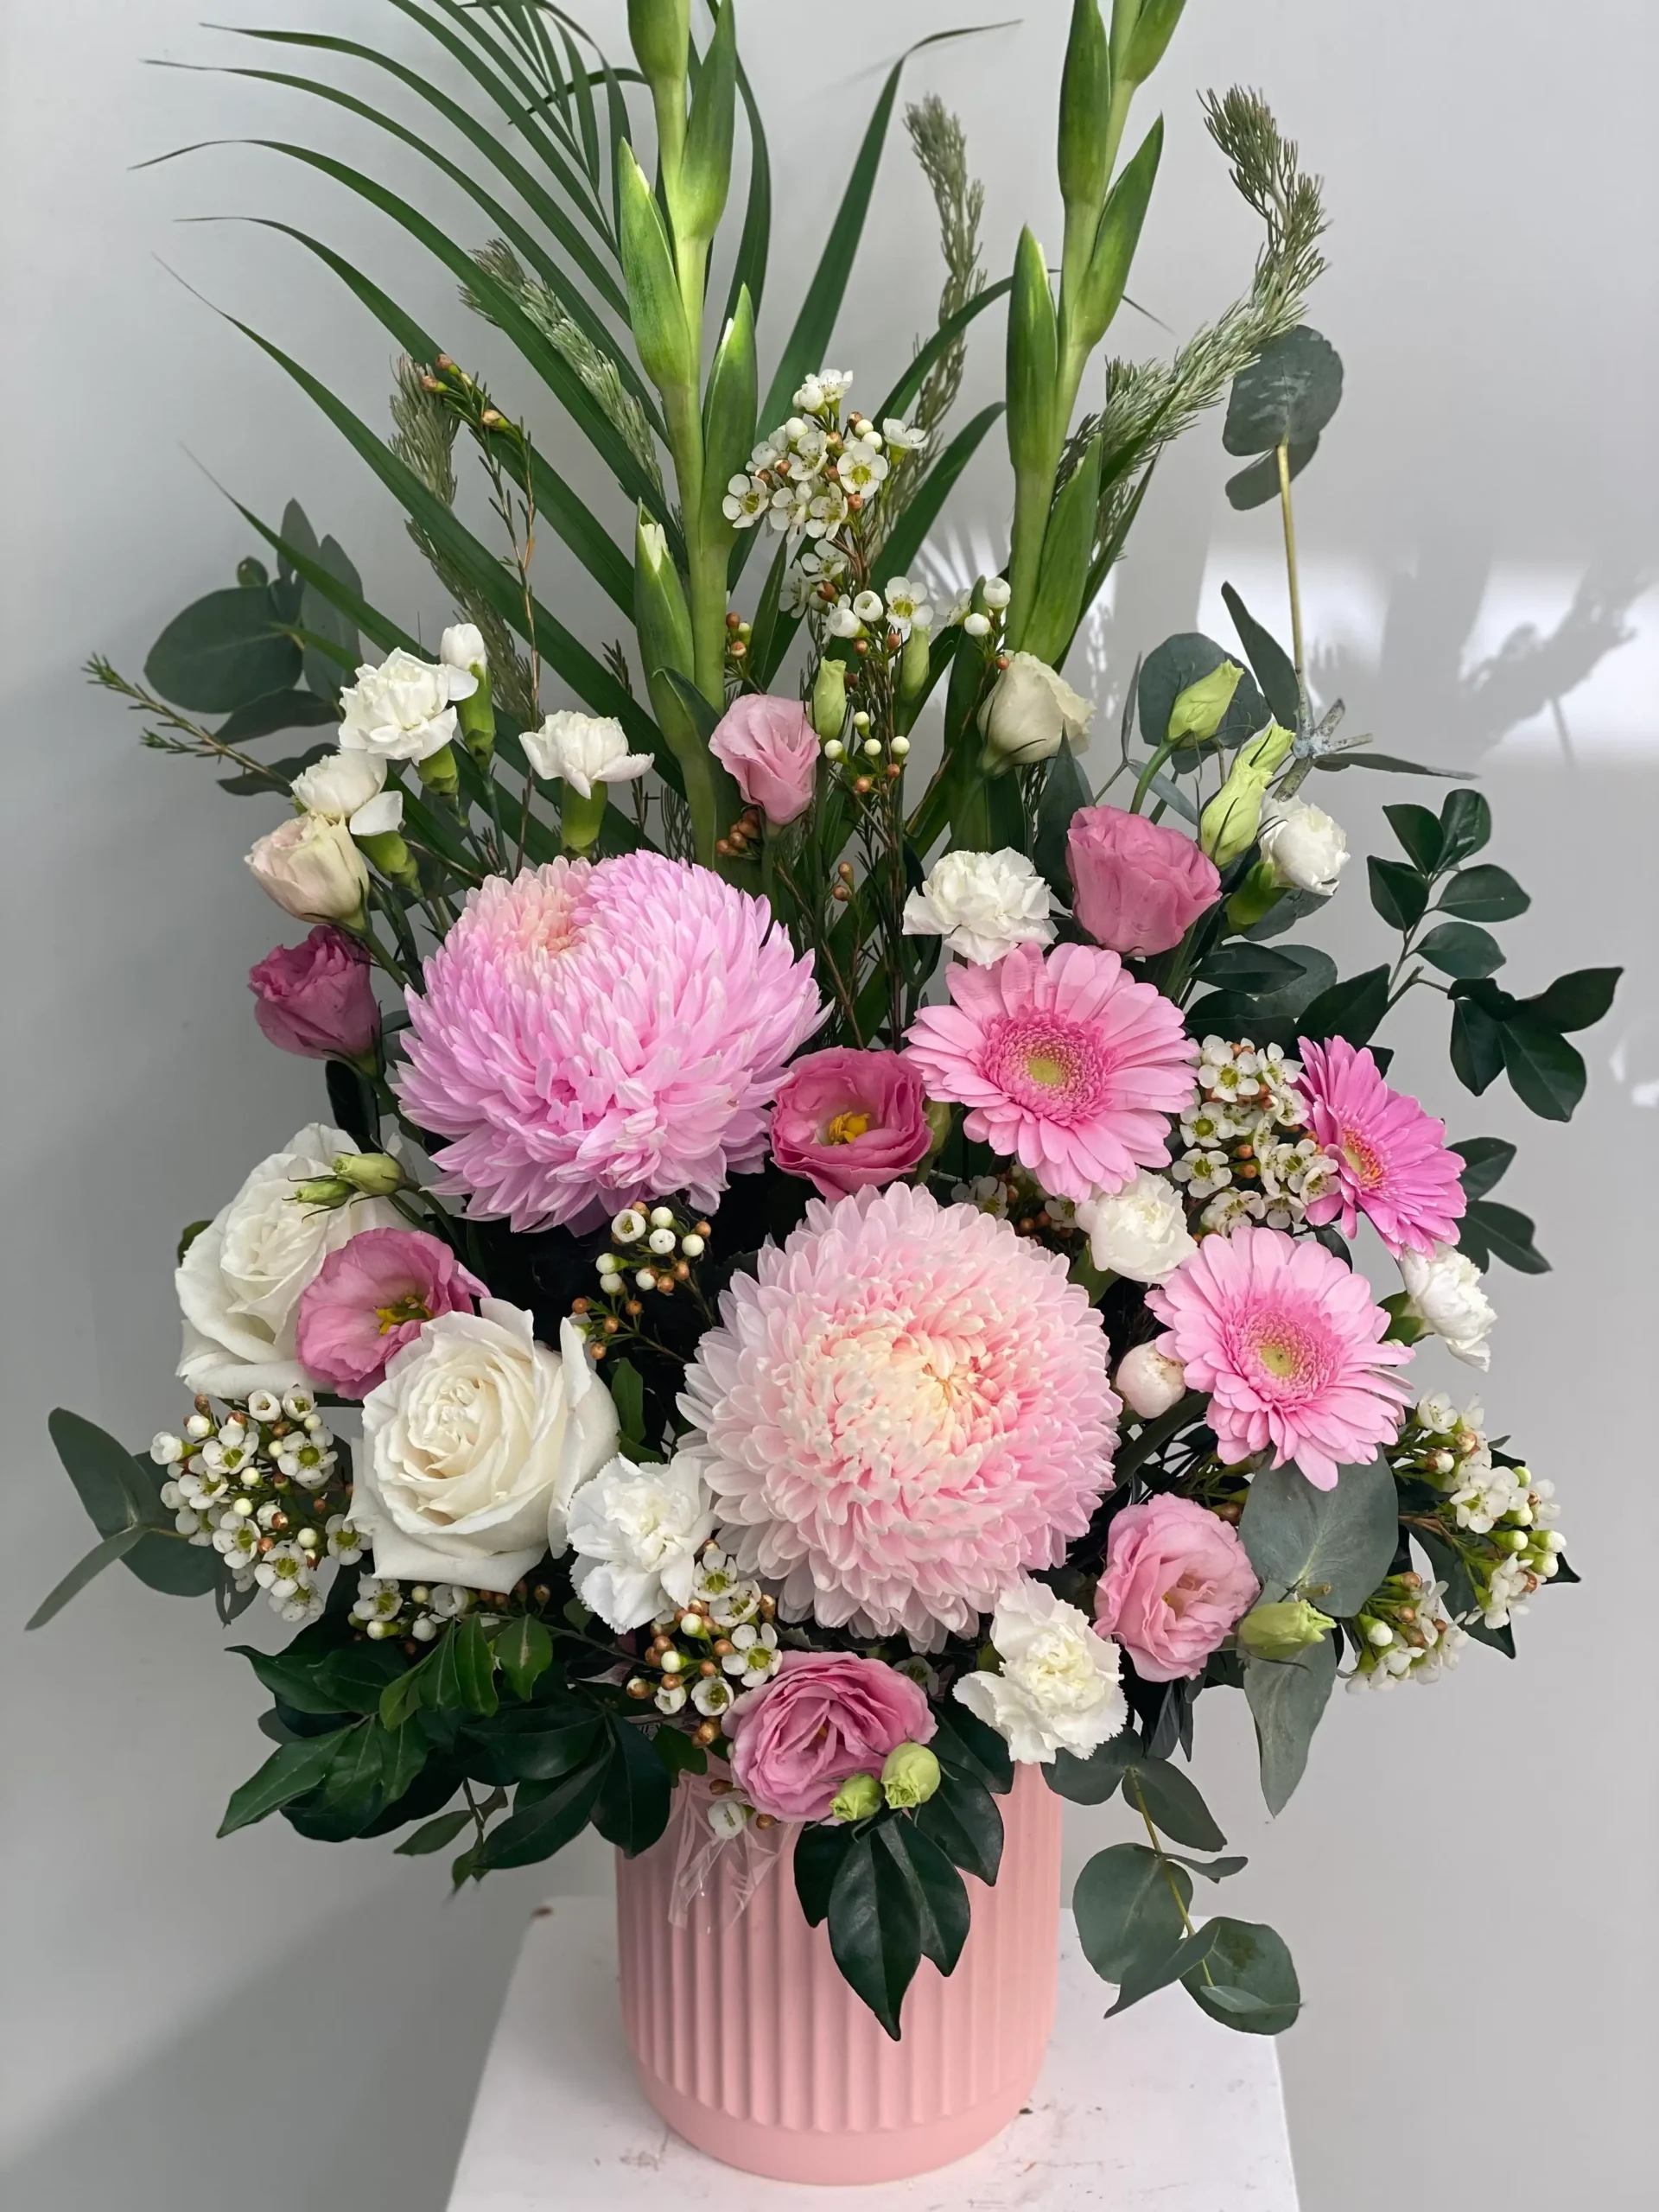 Floral arrangement by Hillview Fresh Flowers